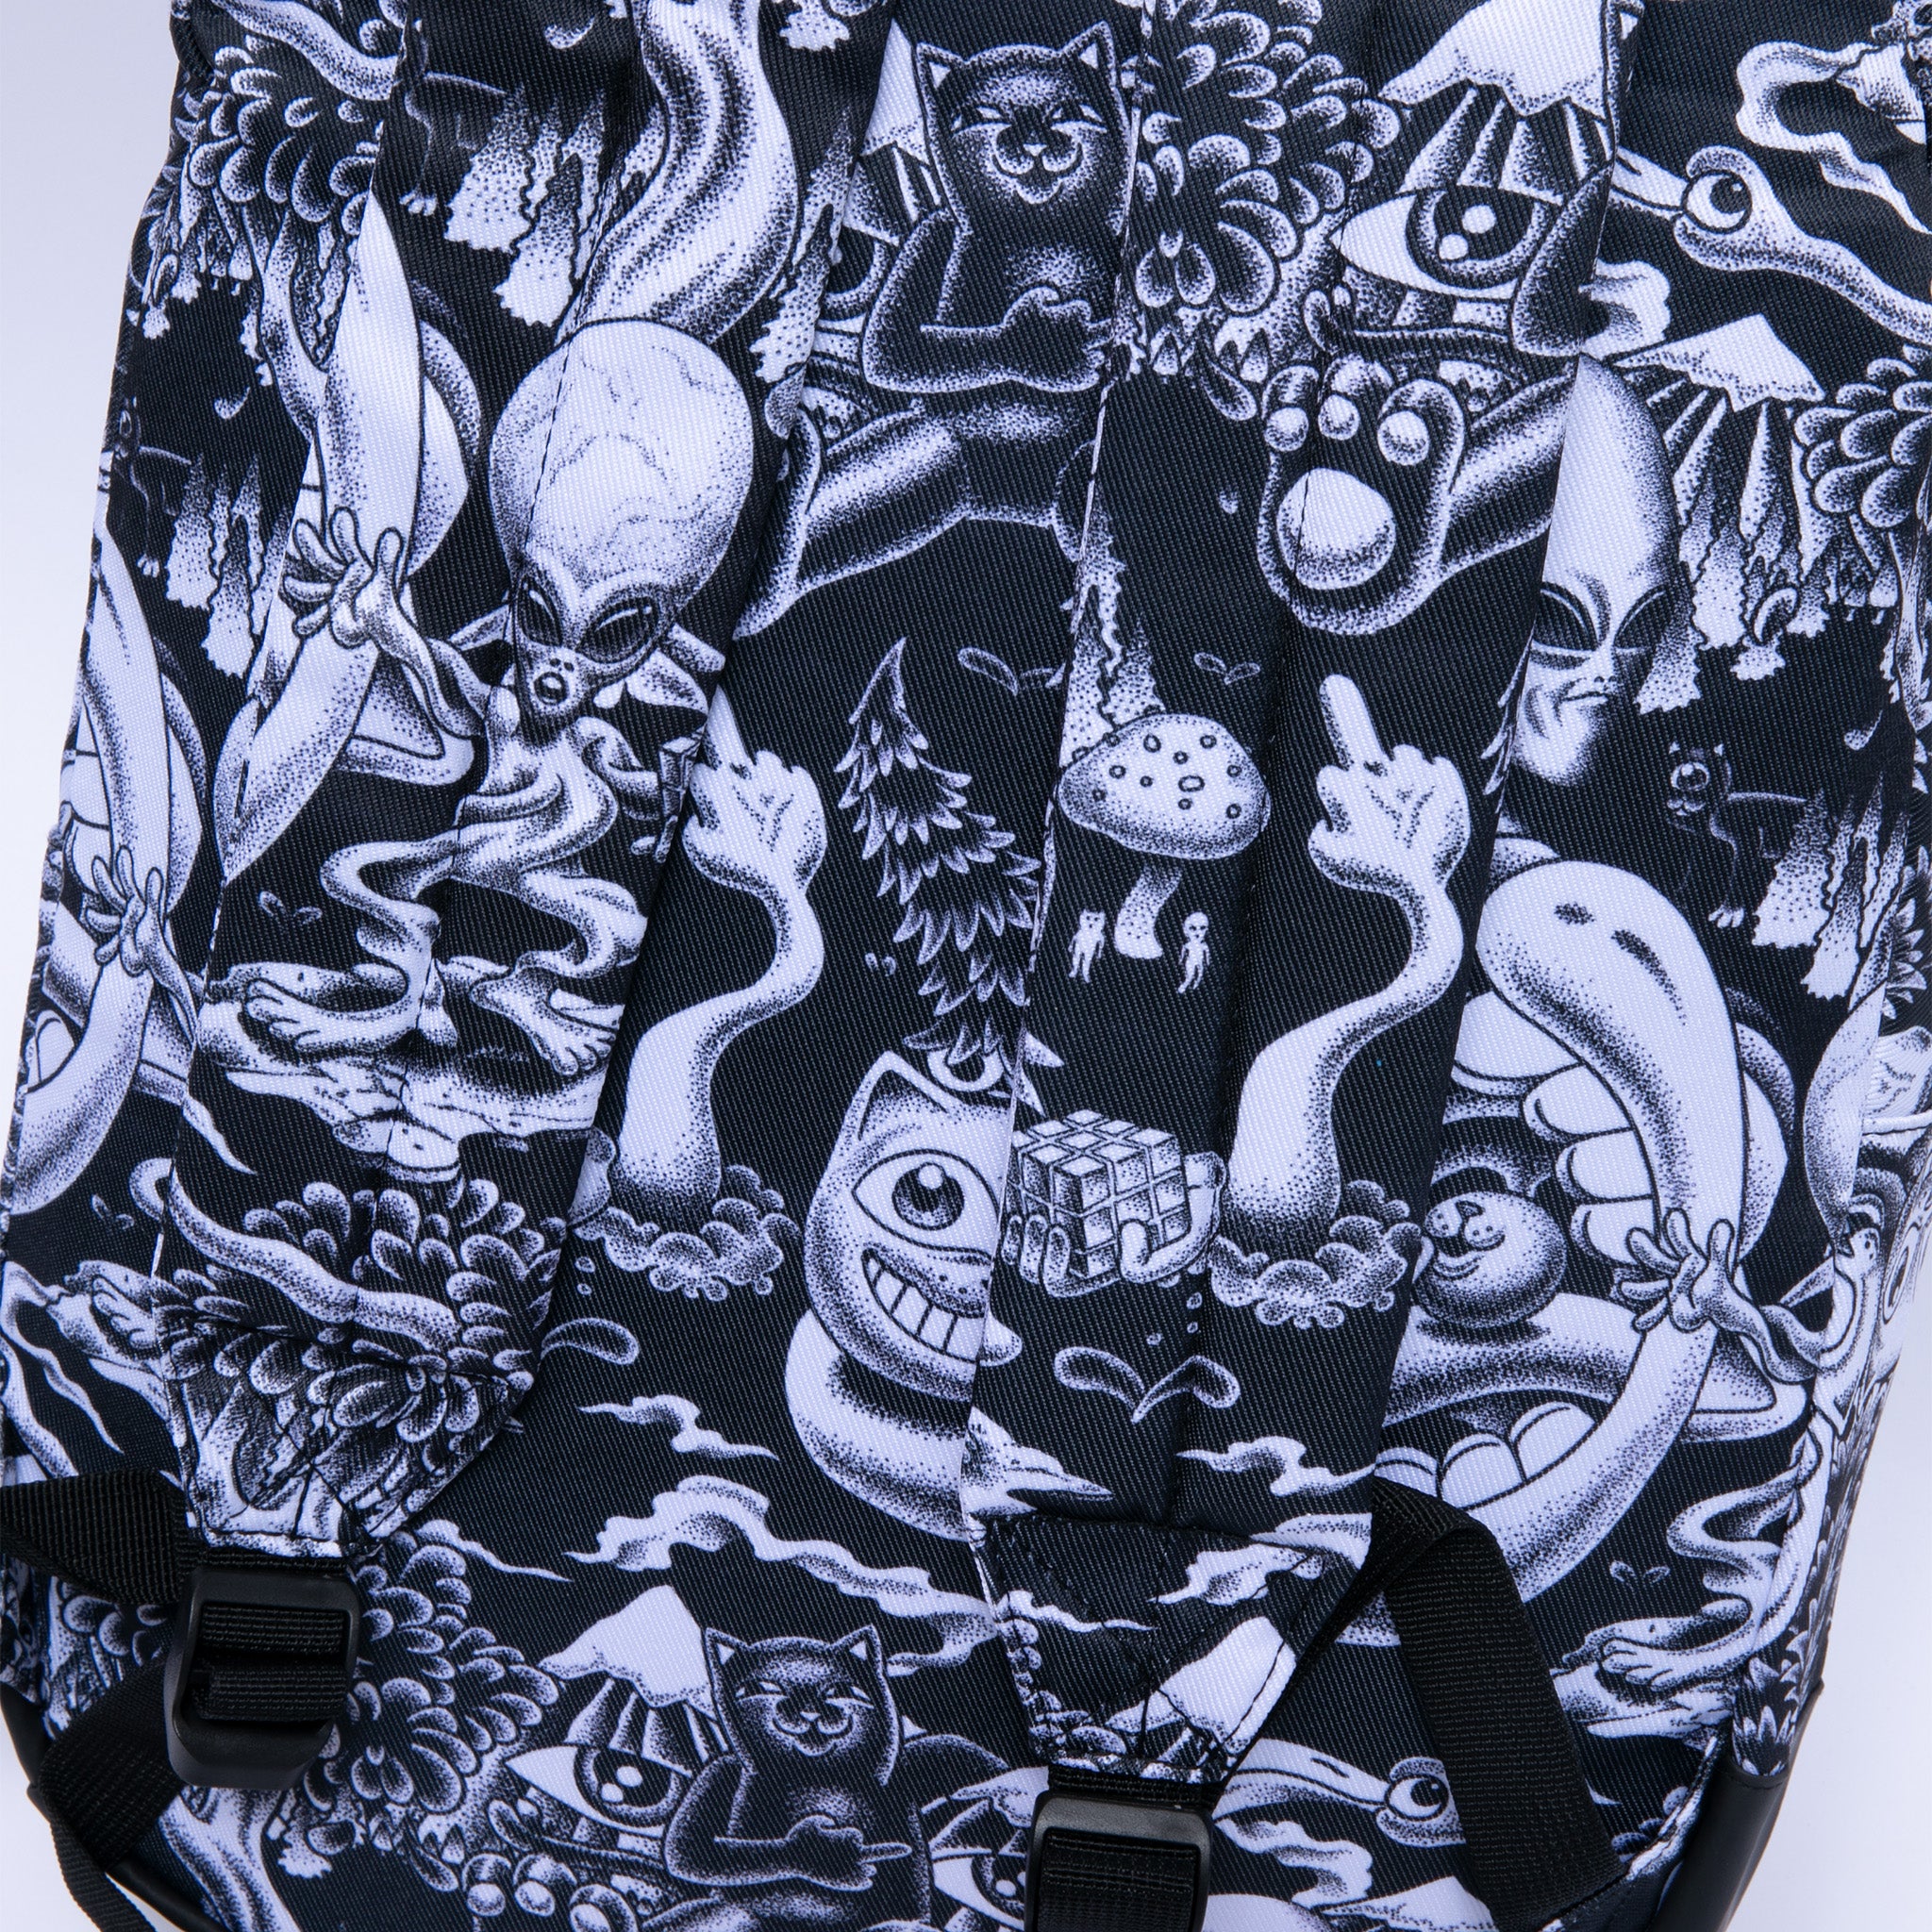 Dark Twisted Fantasy Backpack (Black/White)